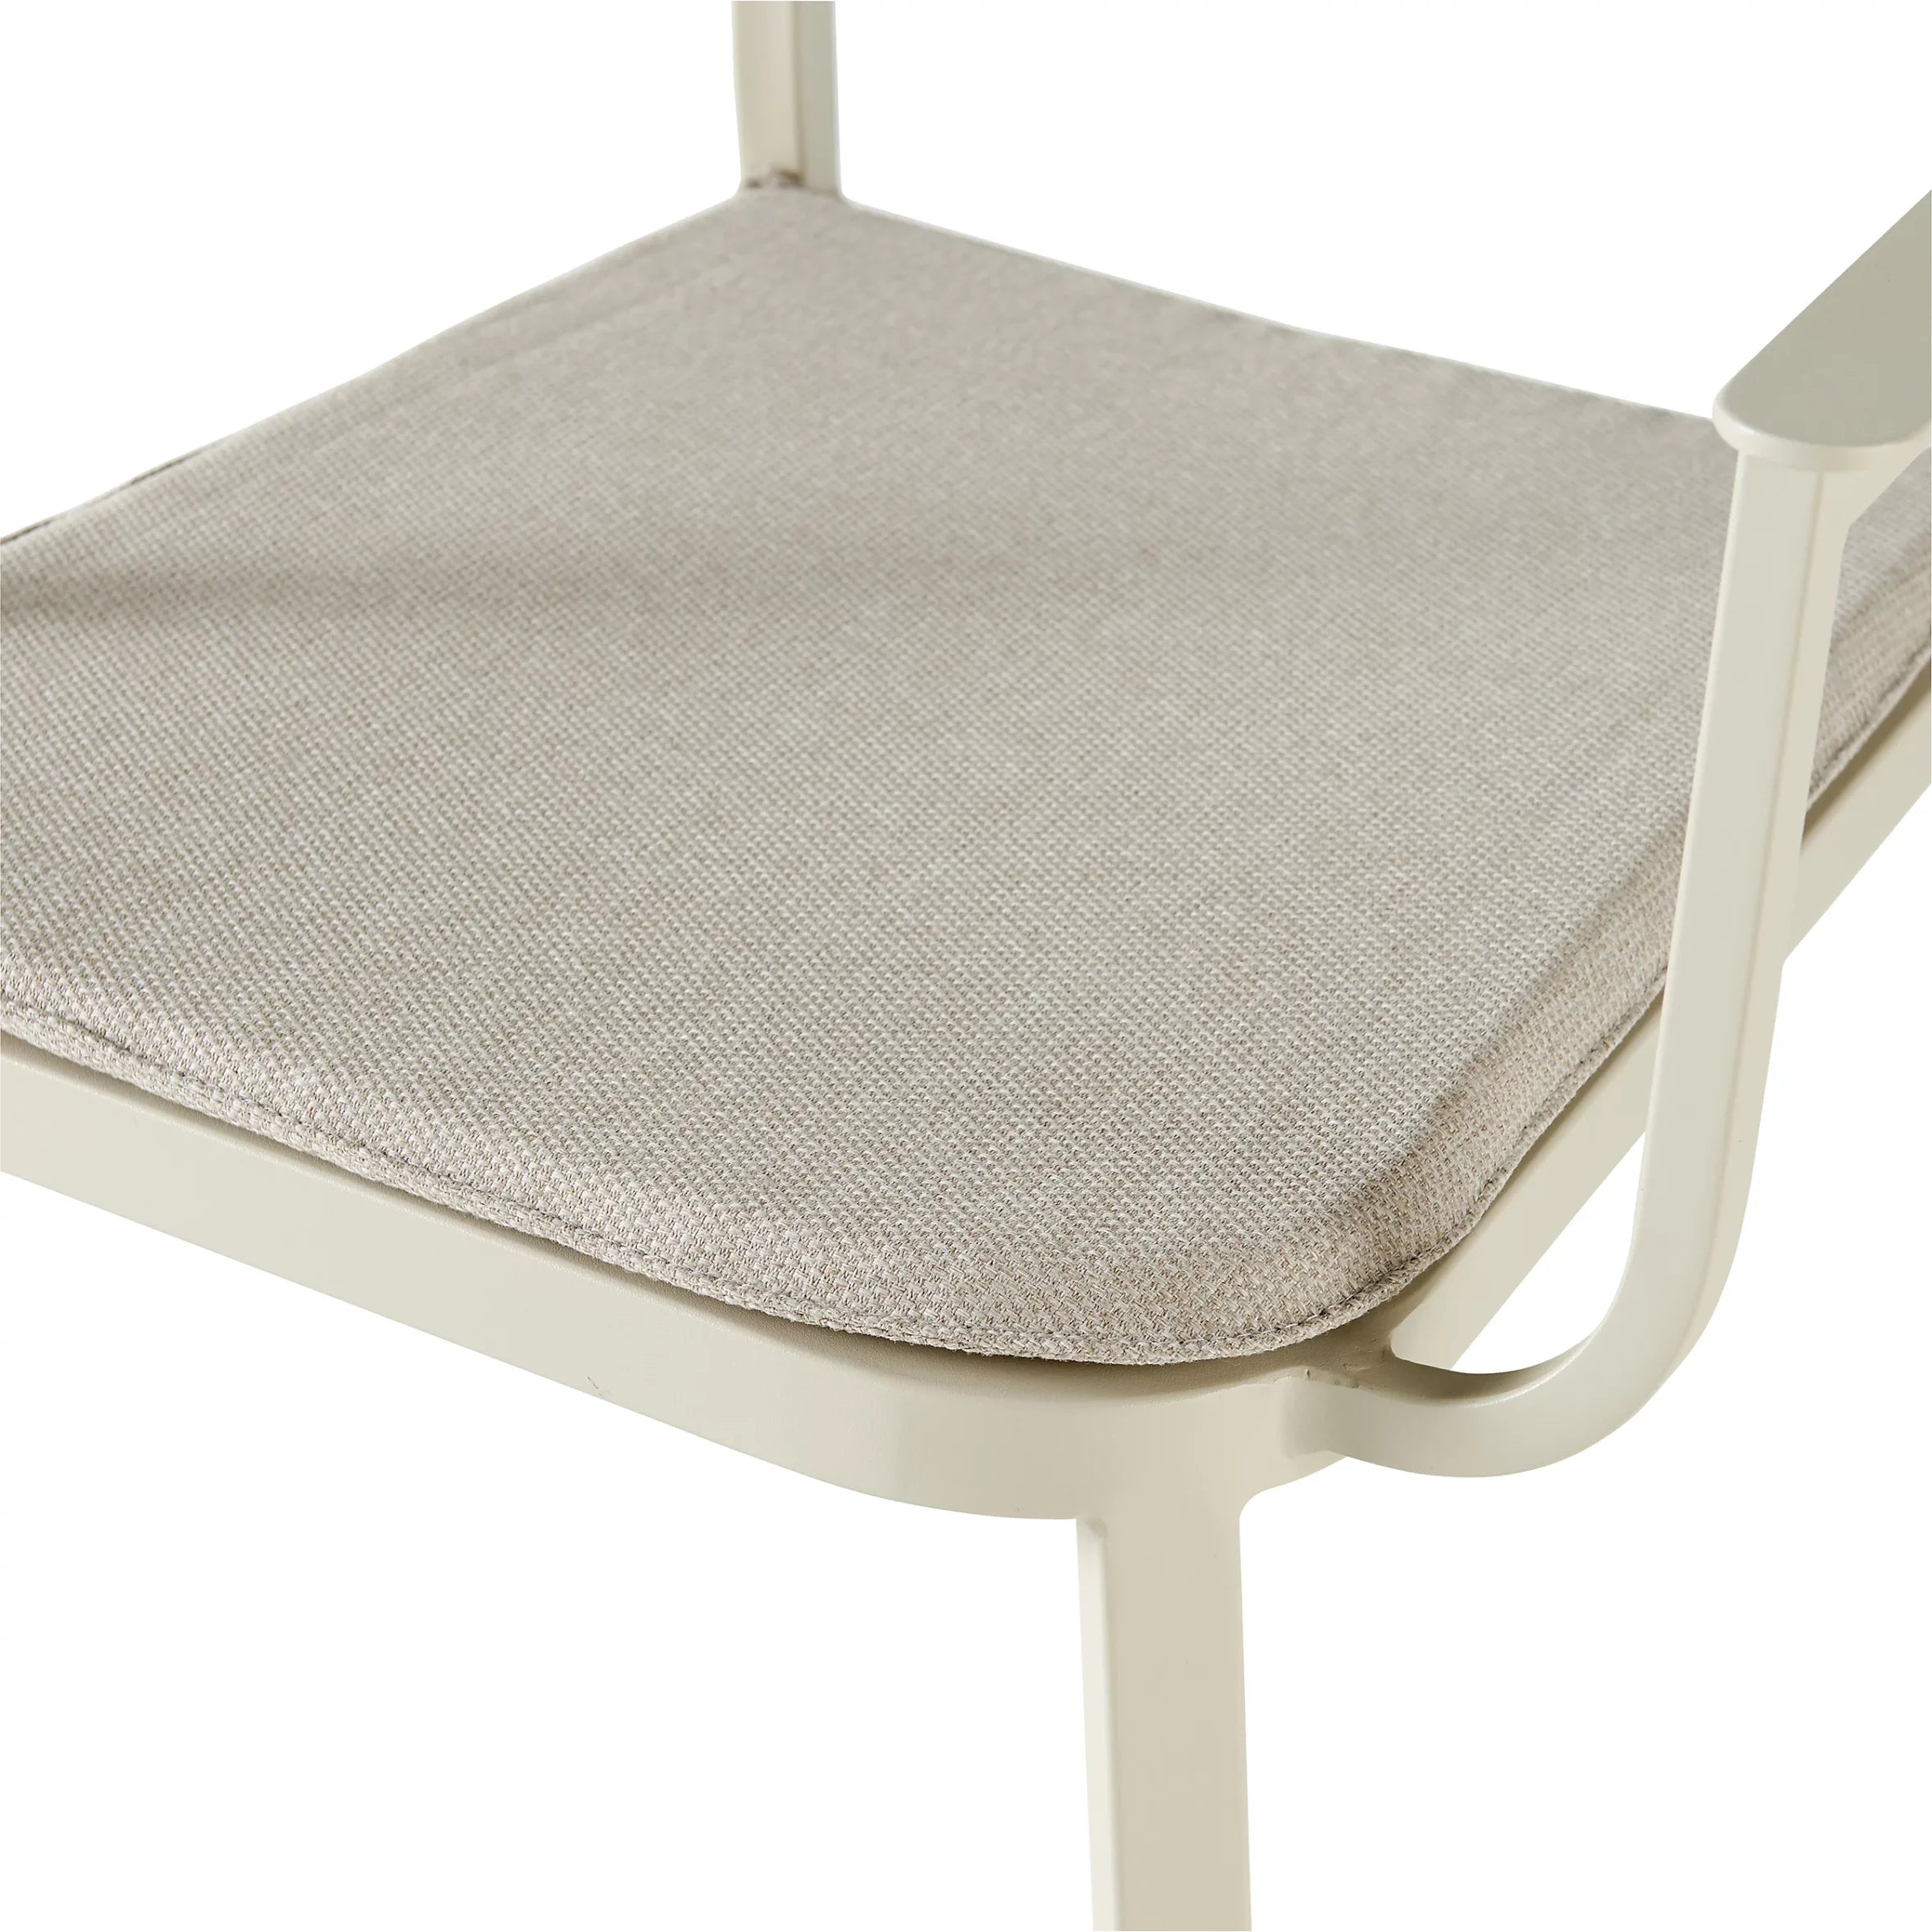 GoodHome Santorin Sand Metal Armchair Garden Furniture Without Cushion -5015